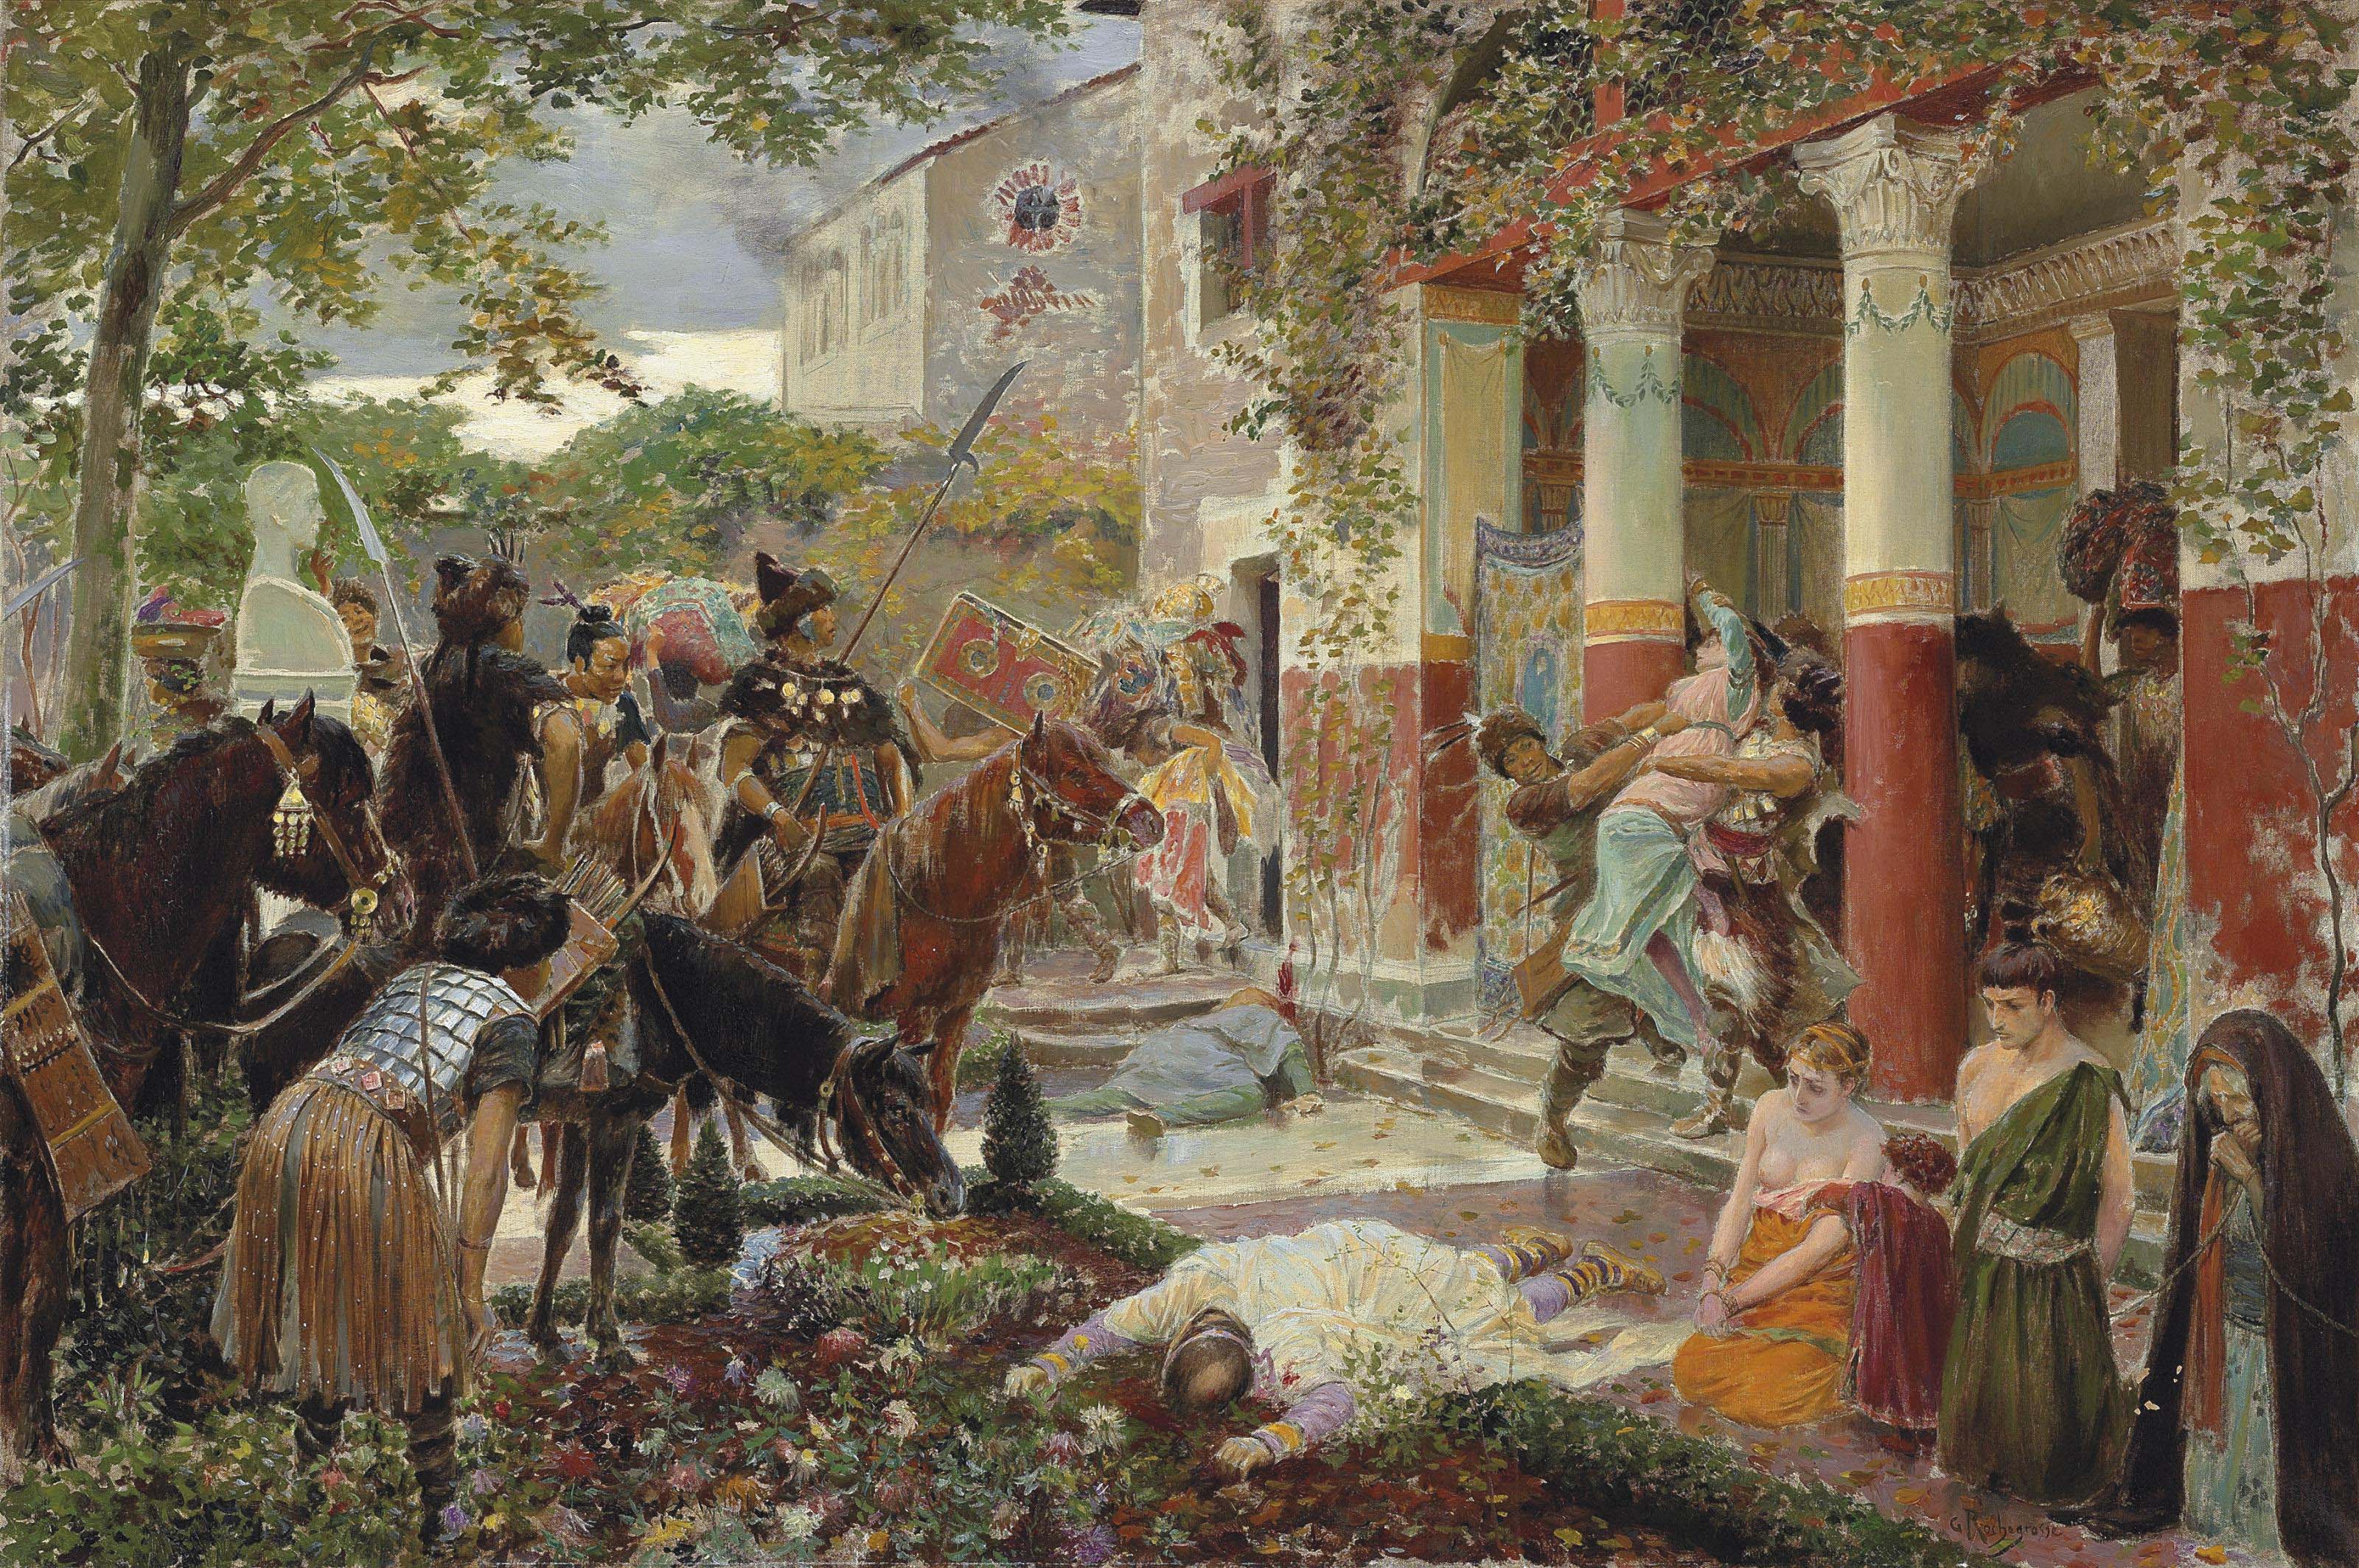 Georges Rochegrosse创作的《阿提拉与匈奴》描绘了高卢地区被洗劫的罗马别墅。